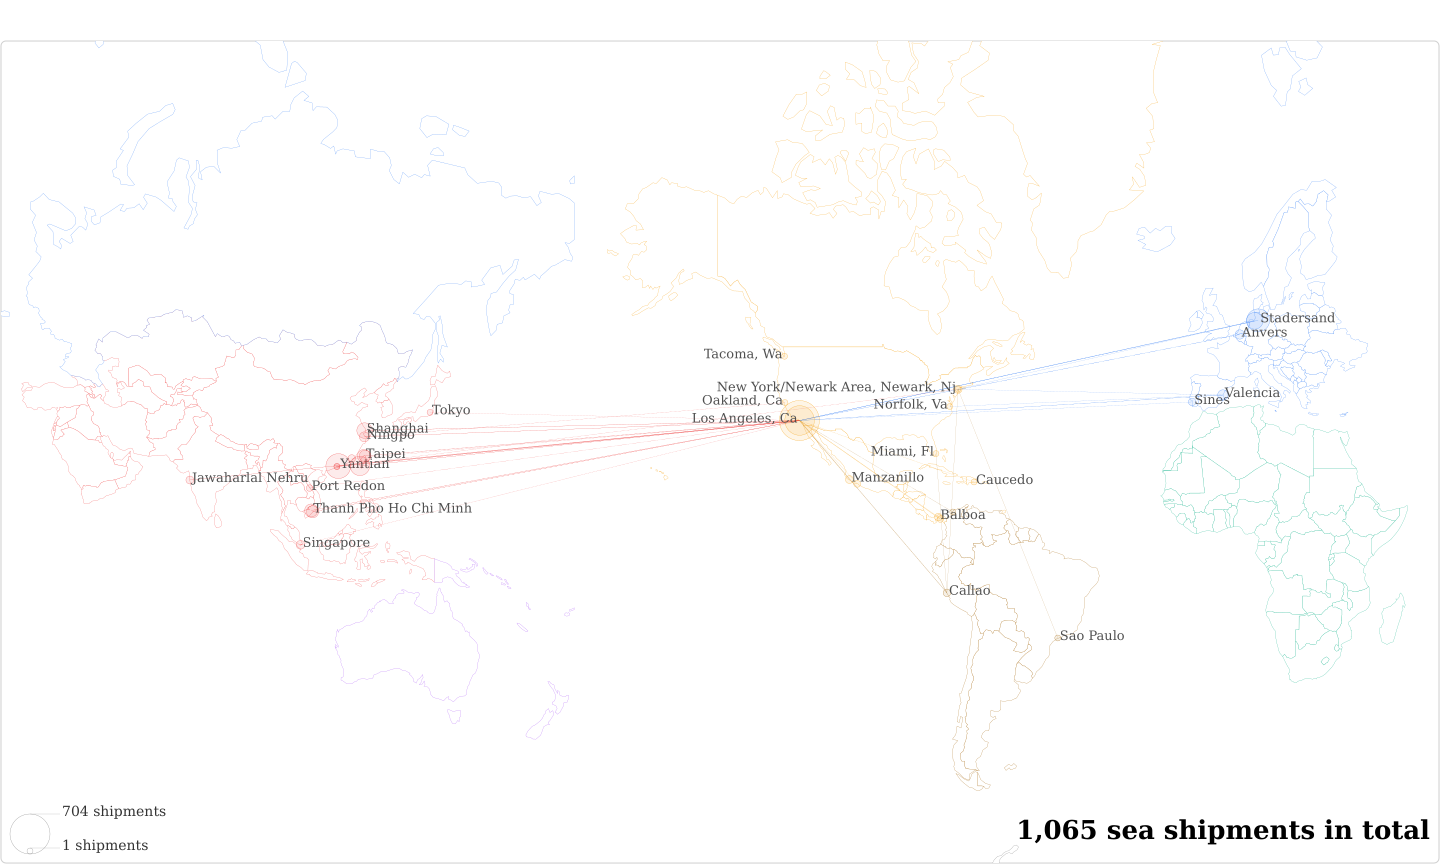 Manduka's Imports Per Country Map